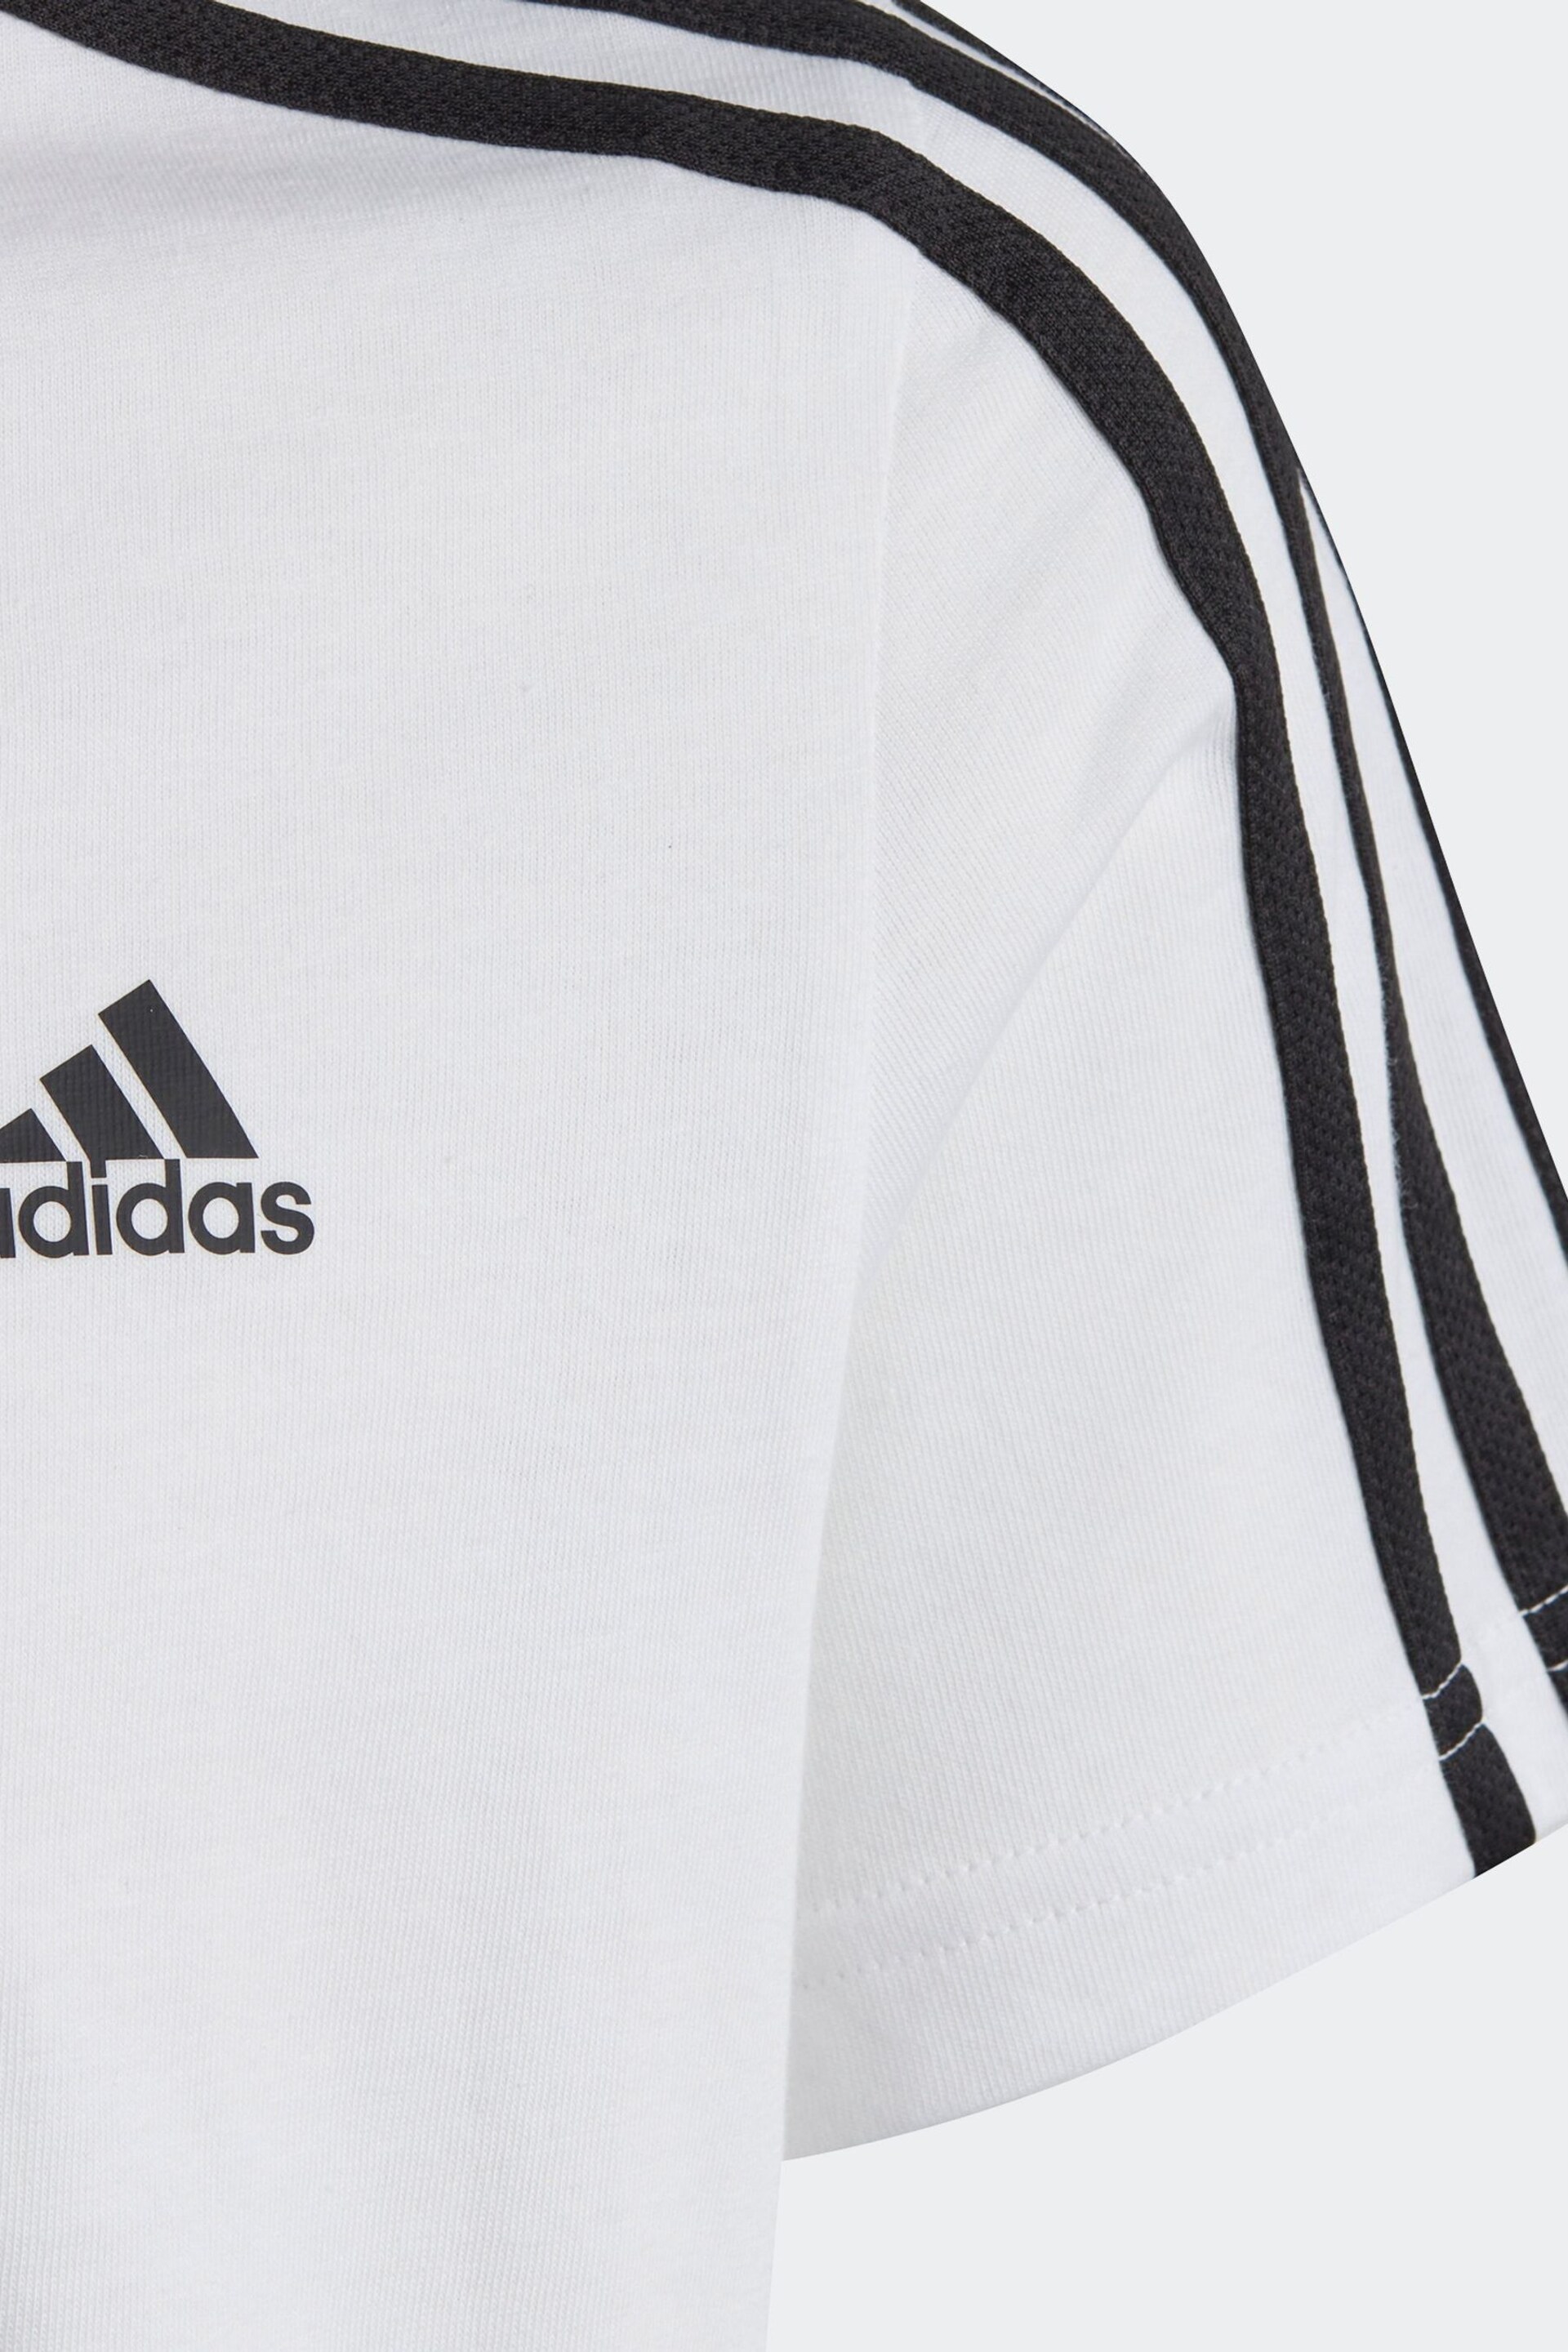 adidas White Essentials 3-Stripes Cotton T-Shirt - Image 8 of 10